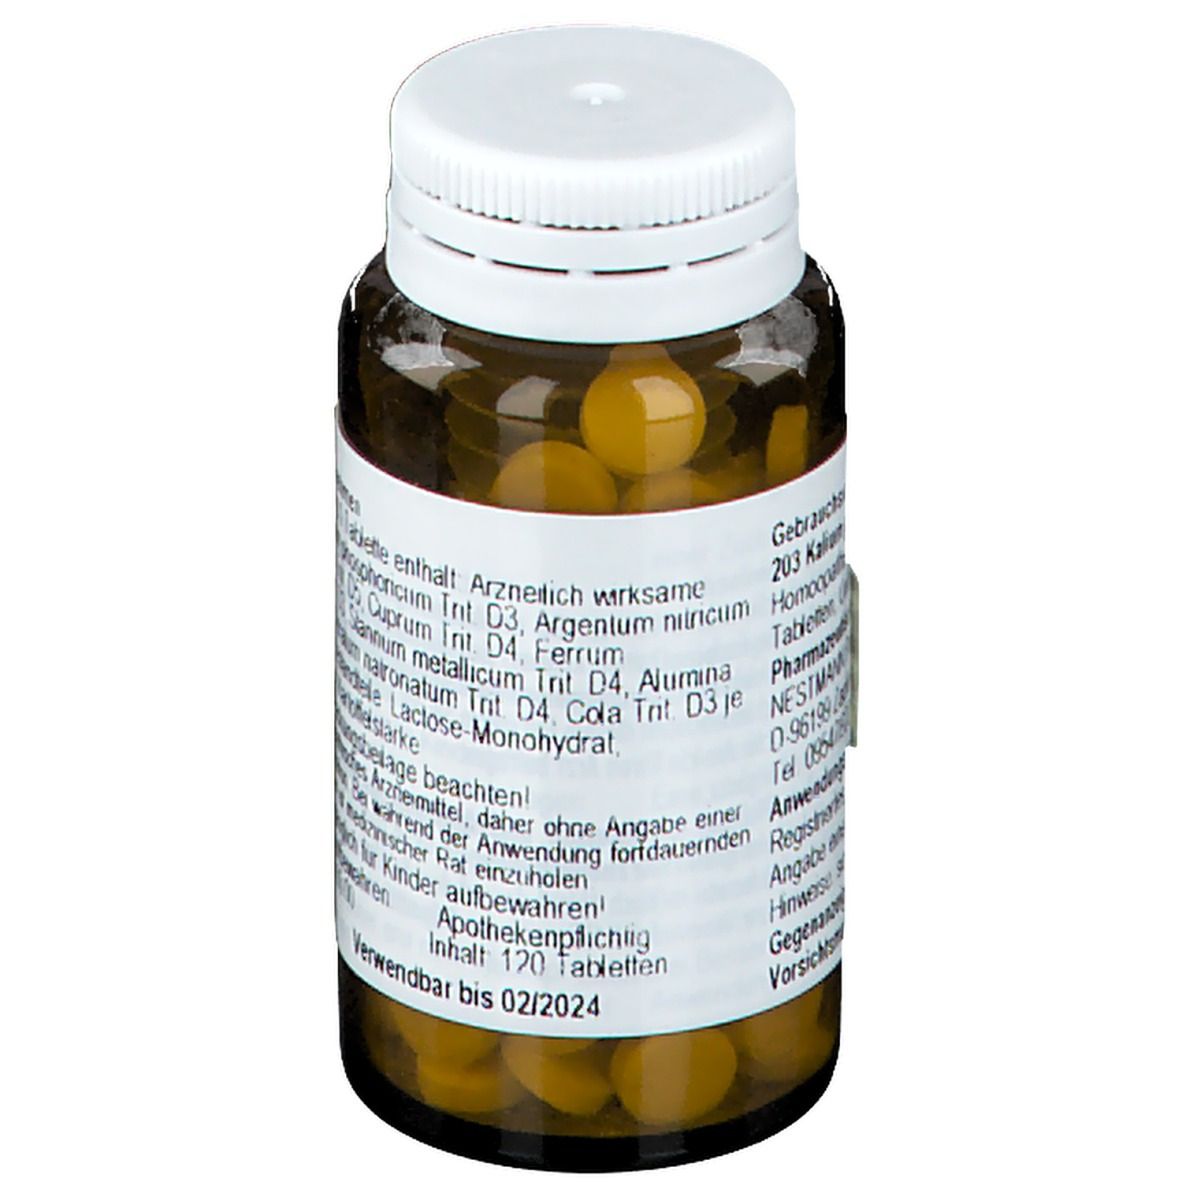 Kalium phosphoricum F 203 Komplex Tabletten